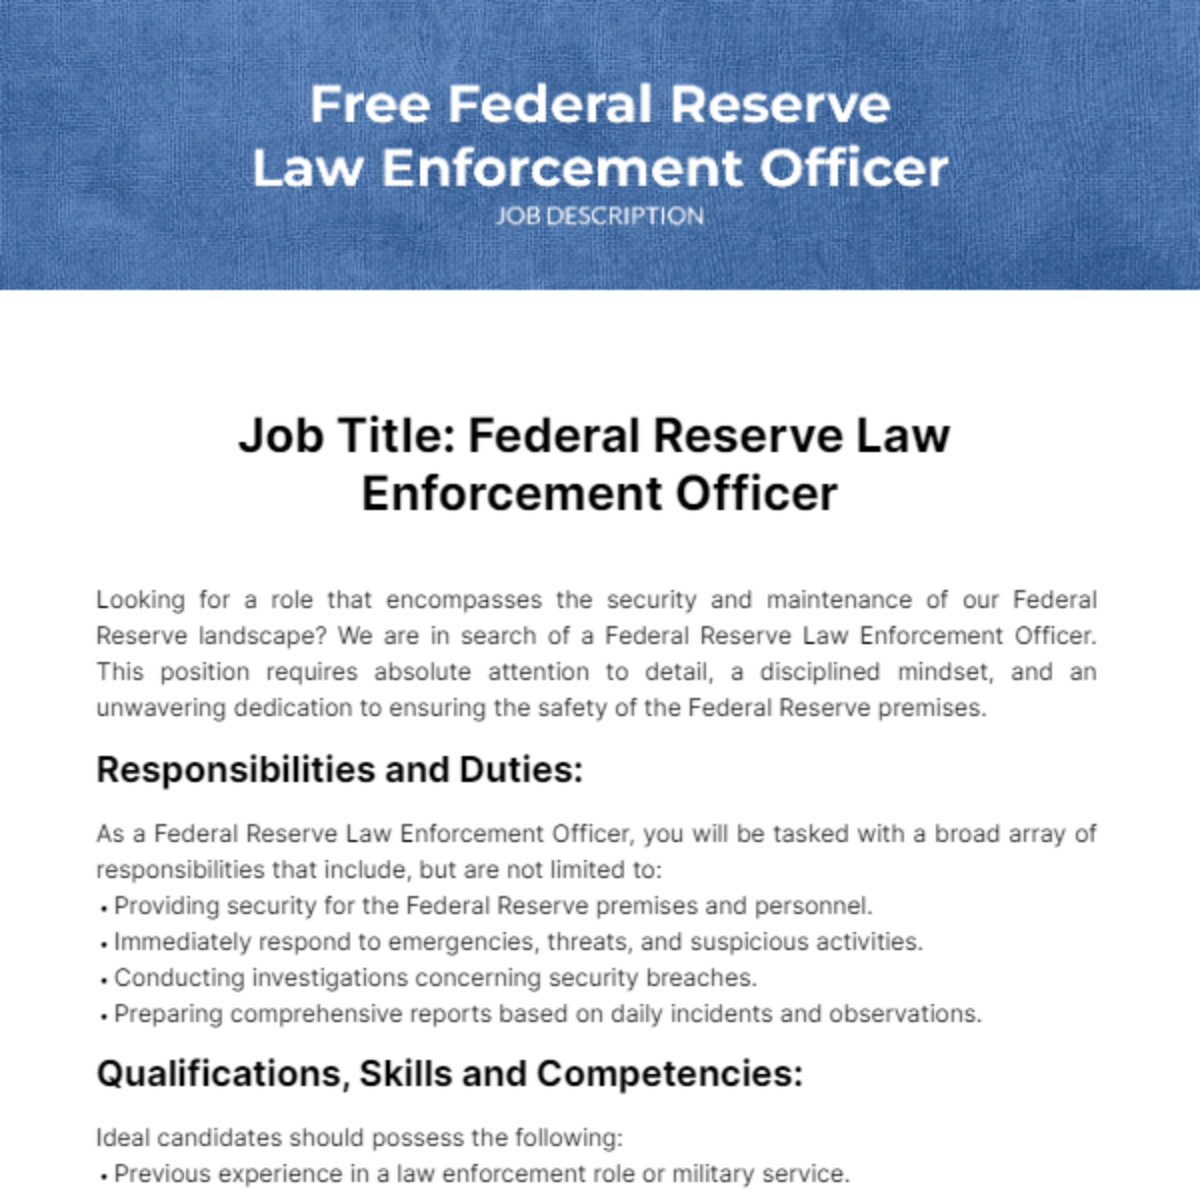 Federal Reserve Law Enforcement Officer Job Description Template